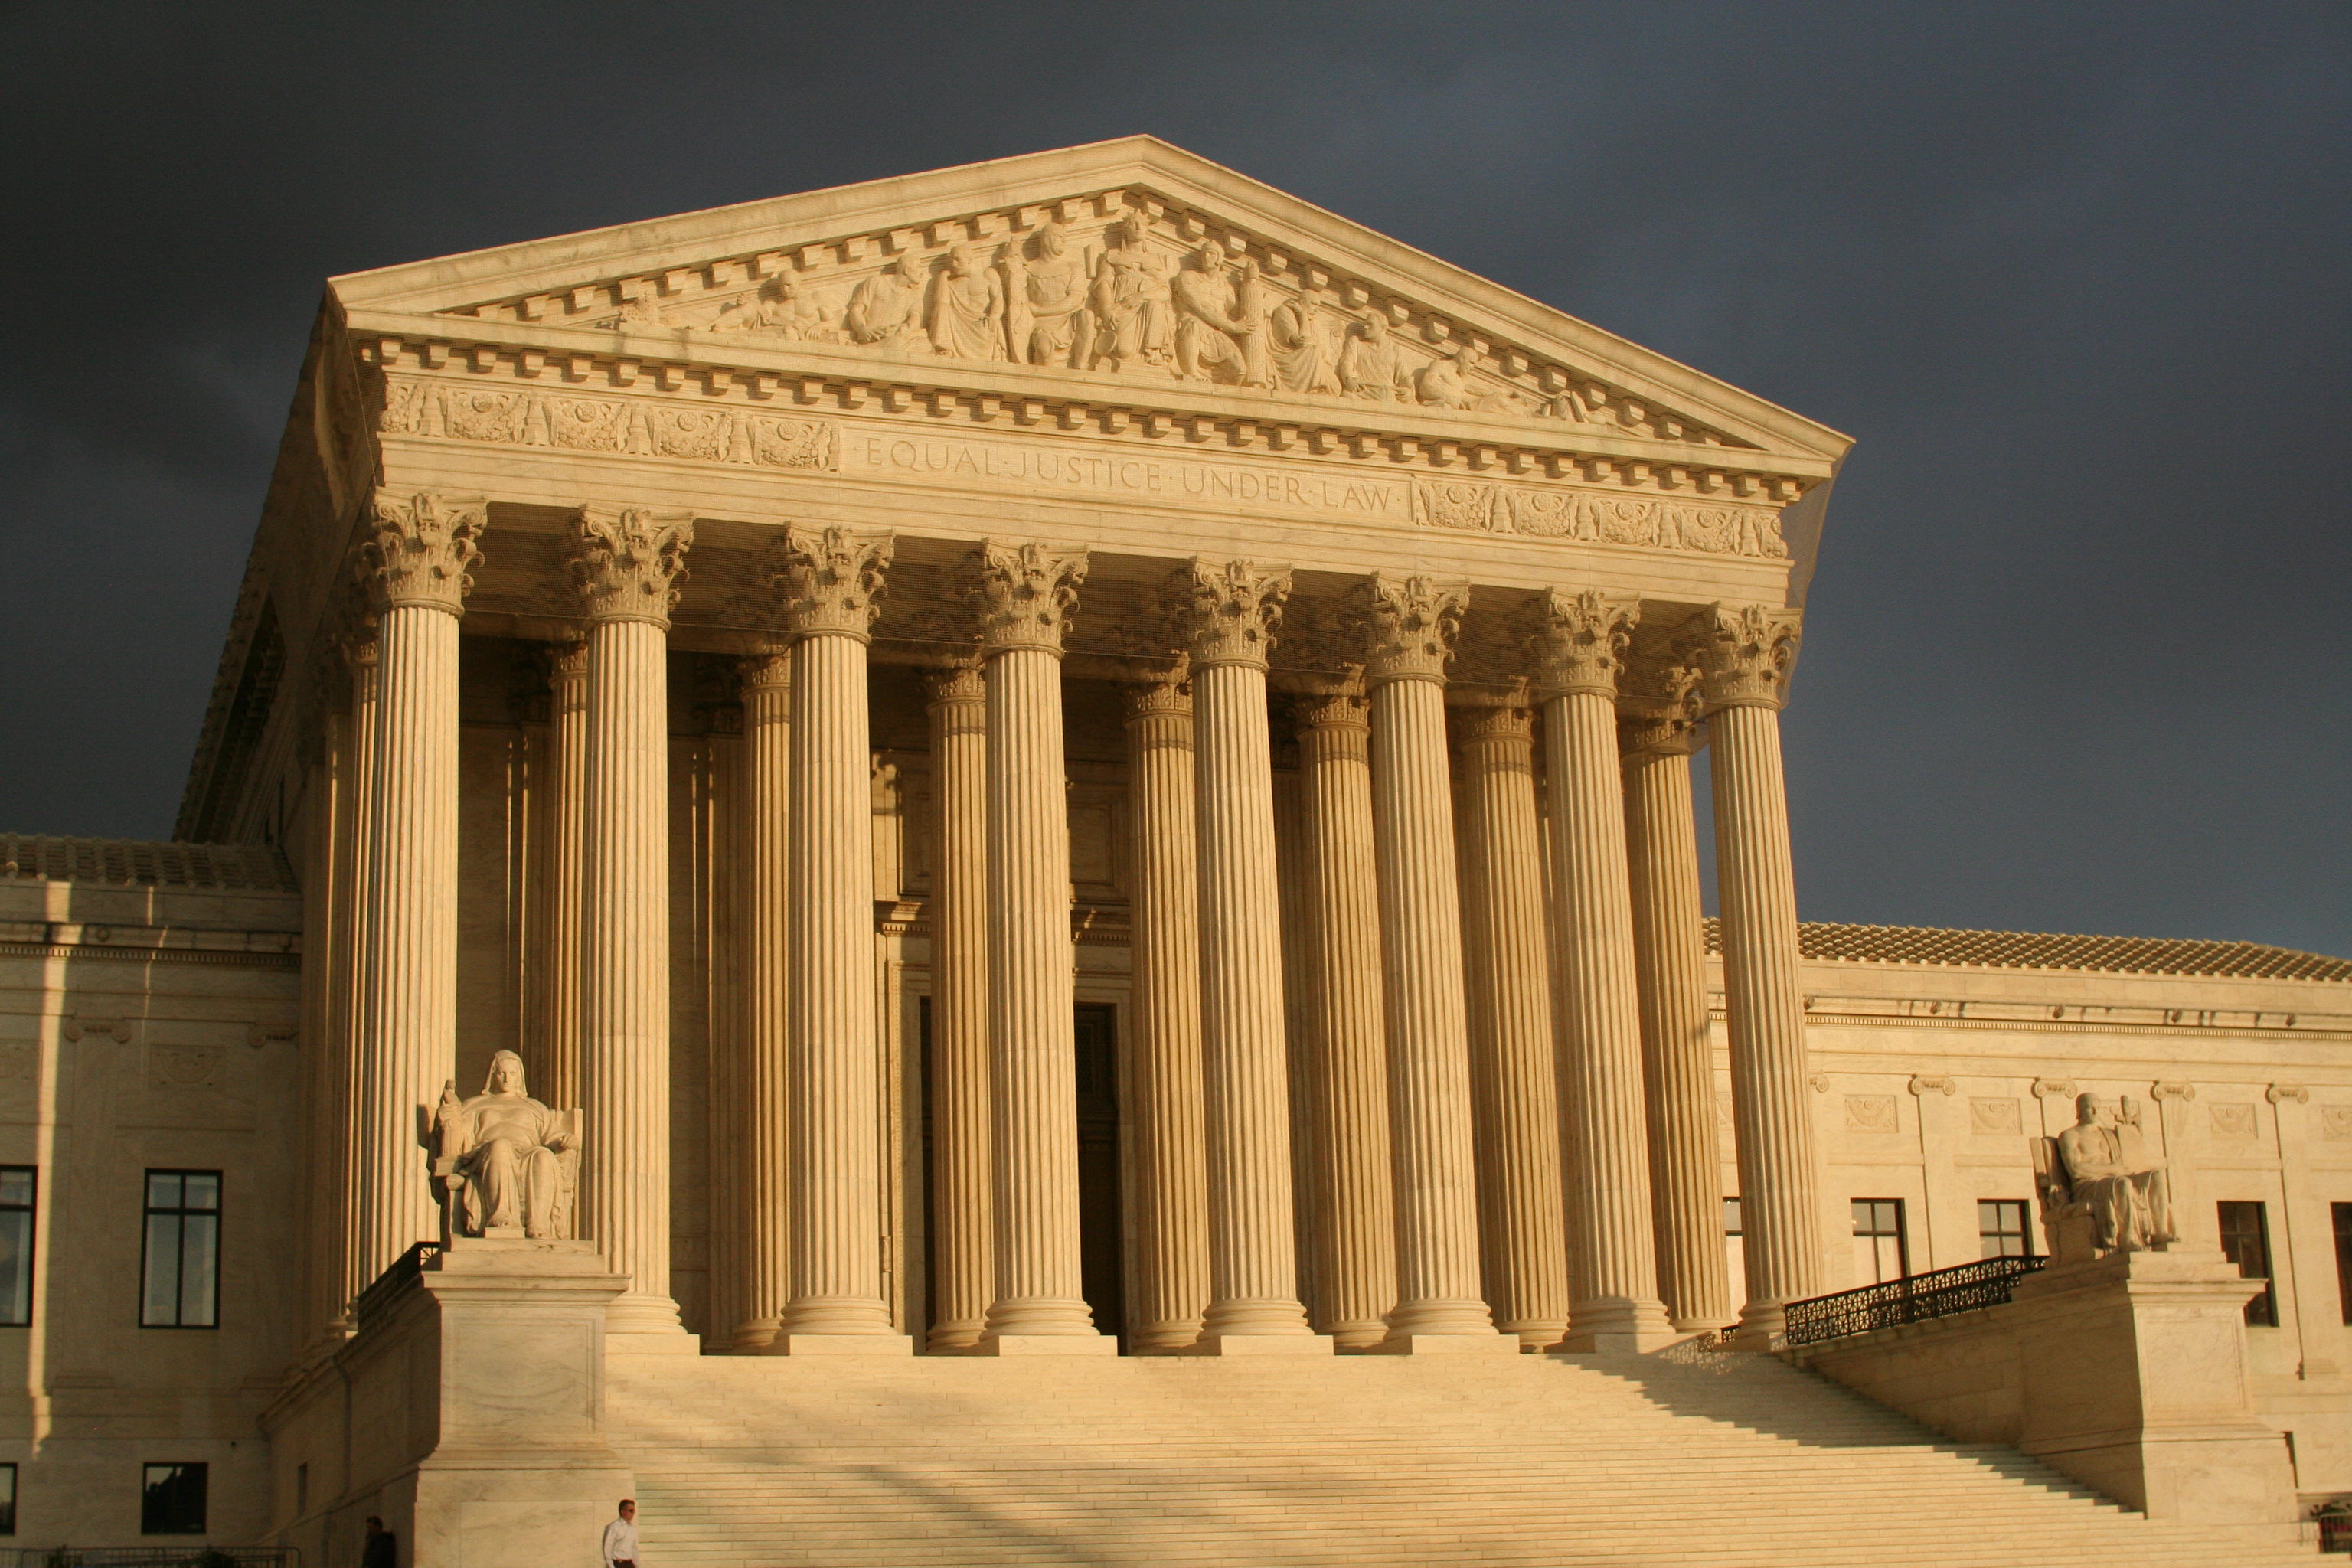 The U.S. Supreme Court building in Washington D.C. (Image by Eric E Johnson)